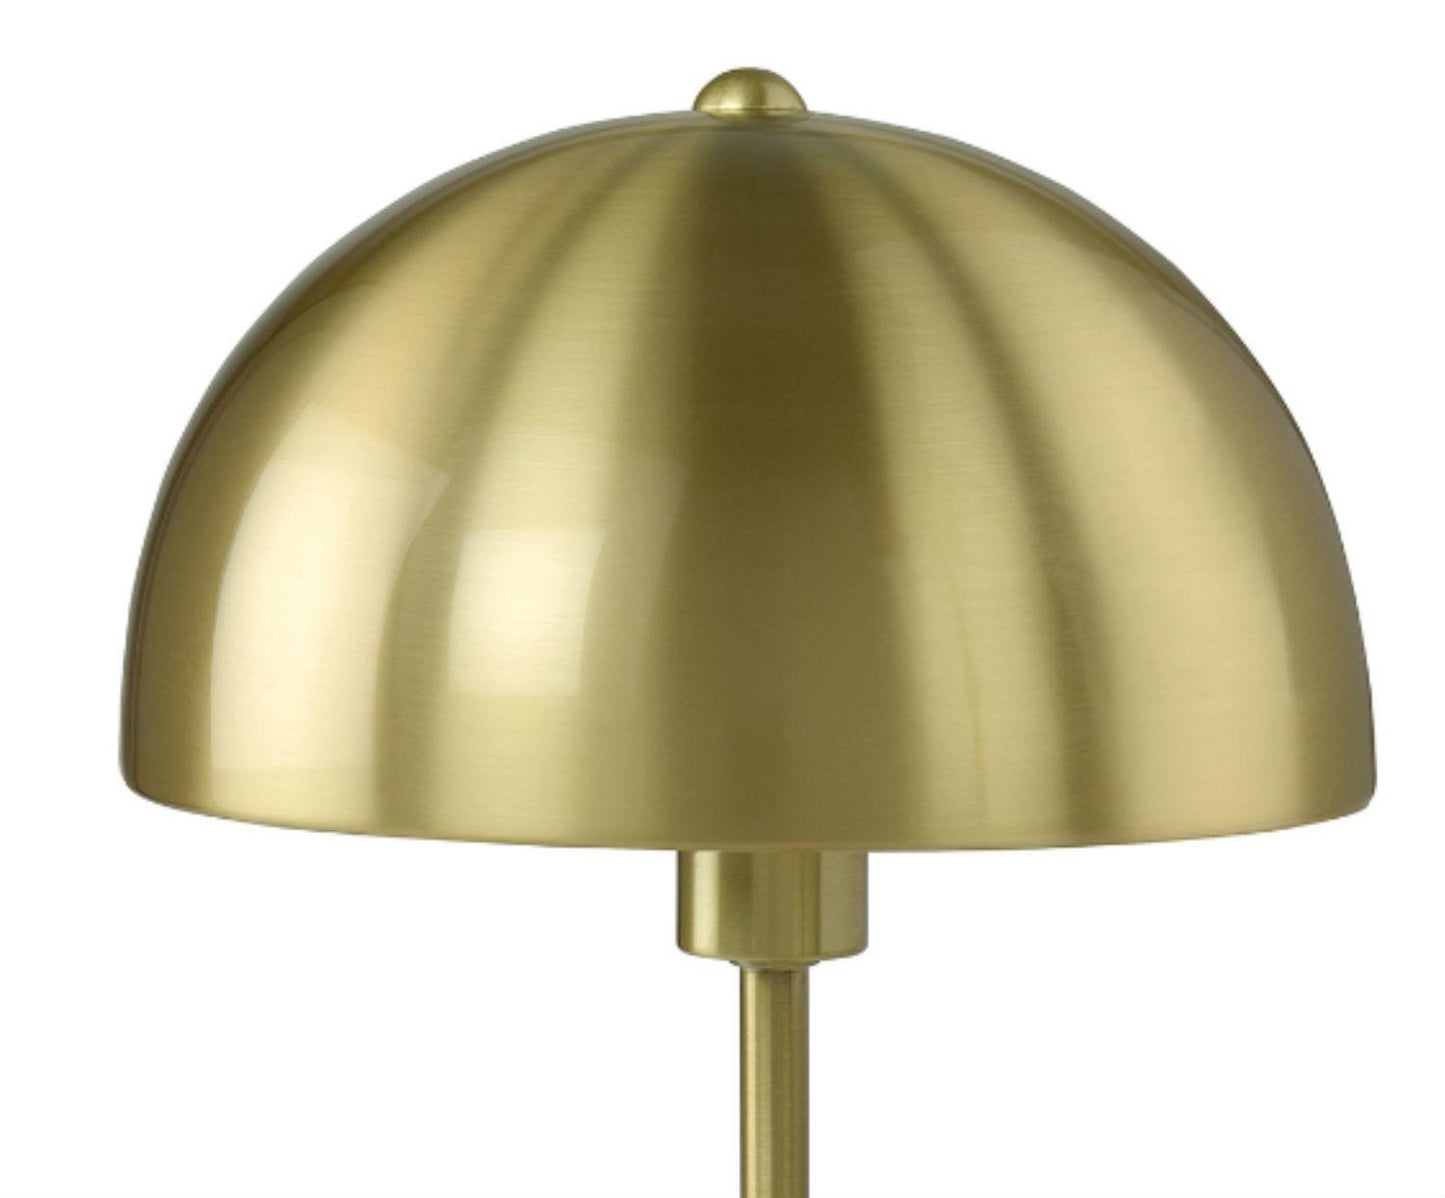 Round Iron Table Lamp